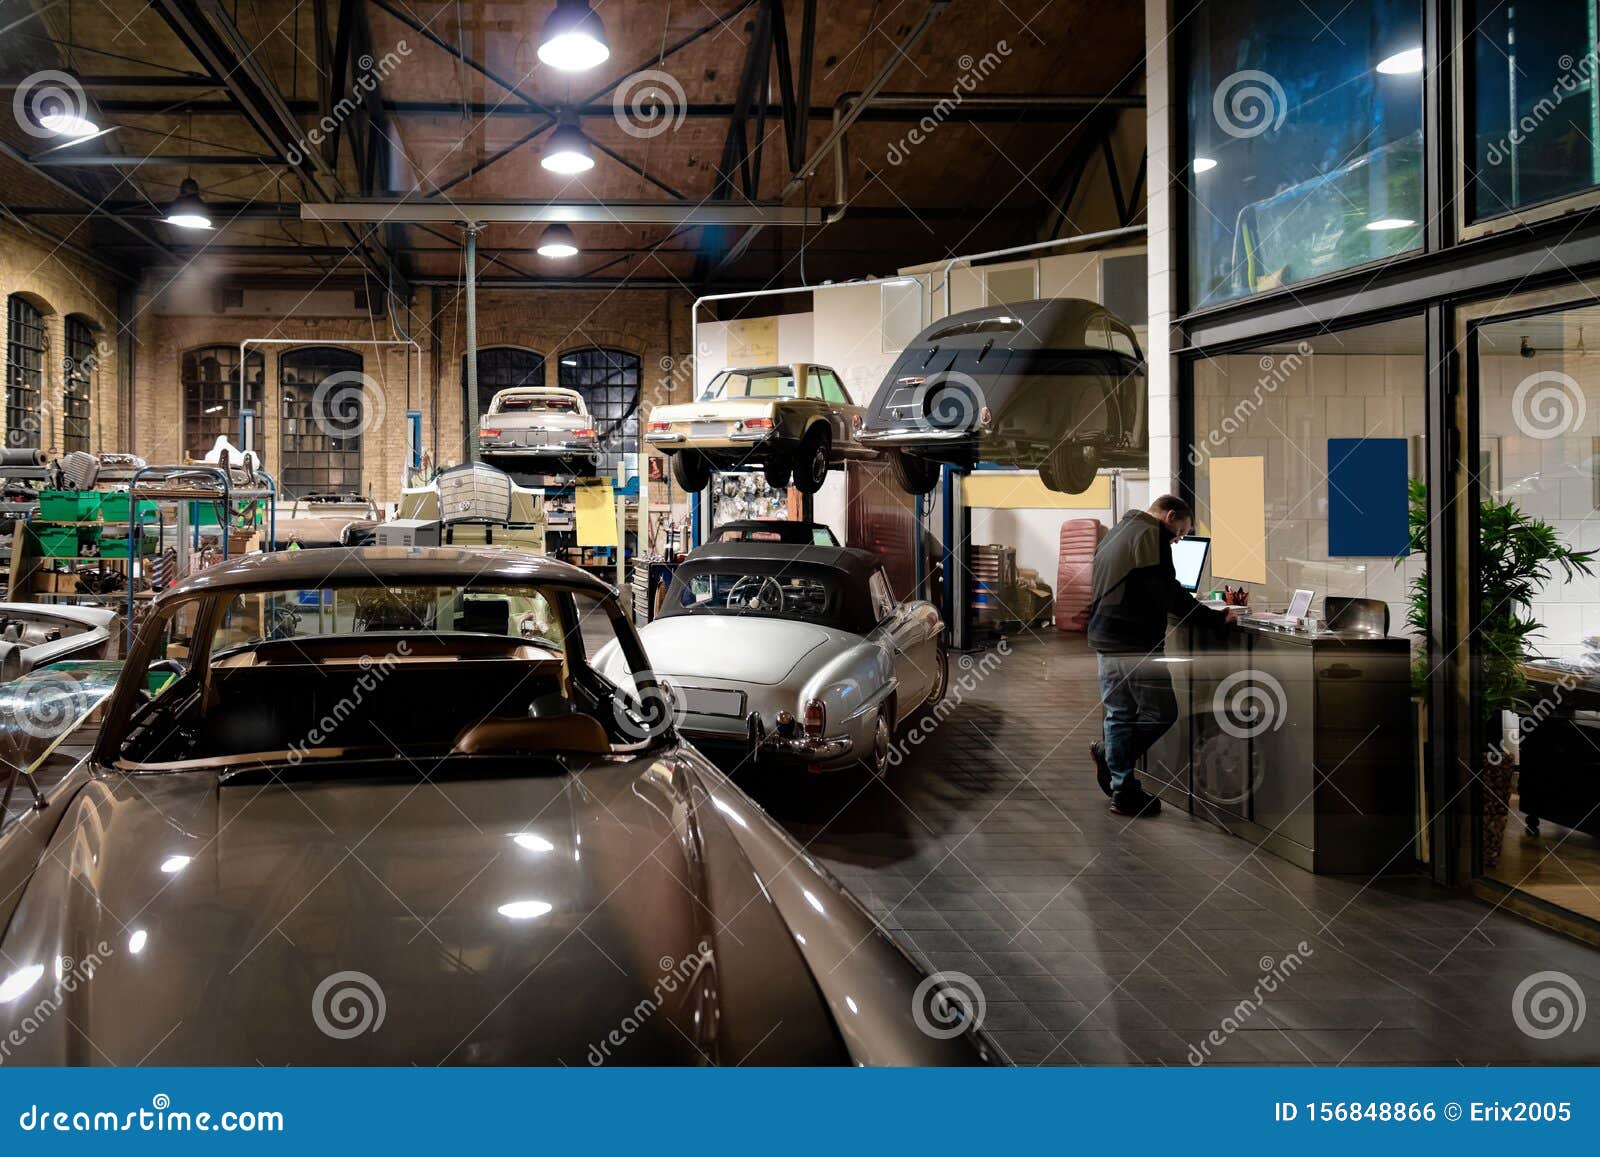 Retro Car Garage And Auto Repair Shop Editorial Photo - Image of repair